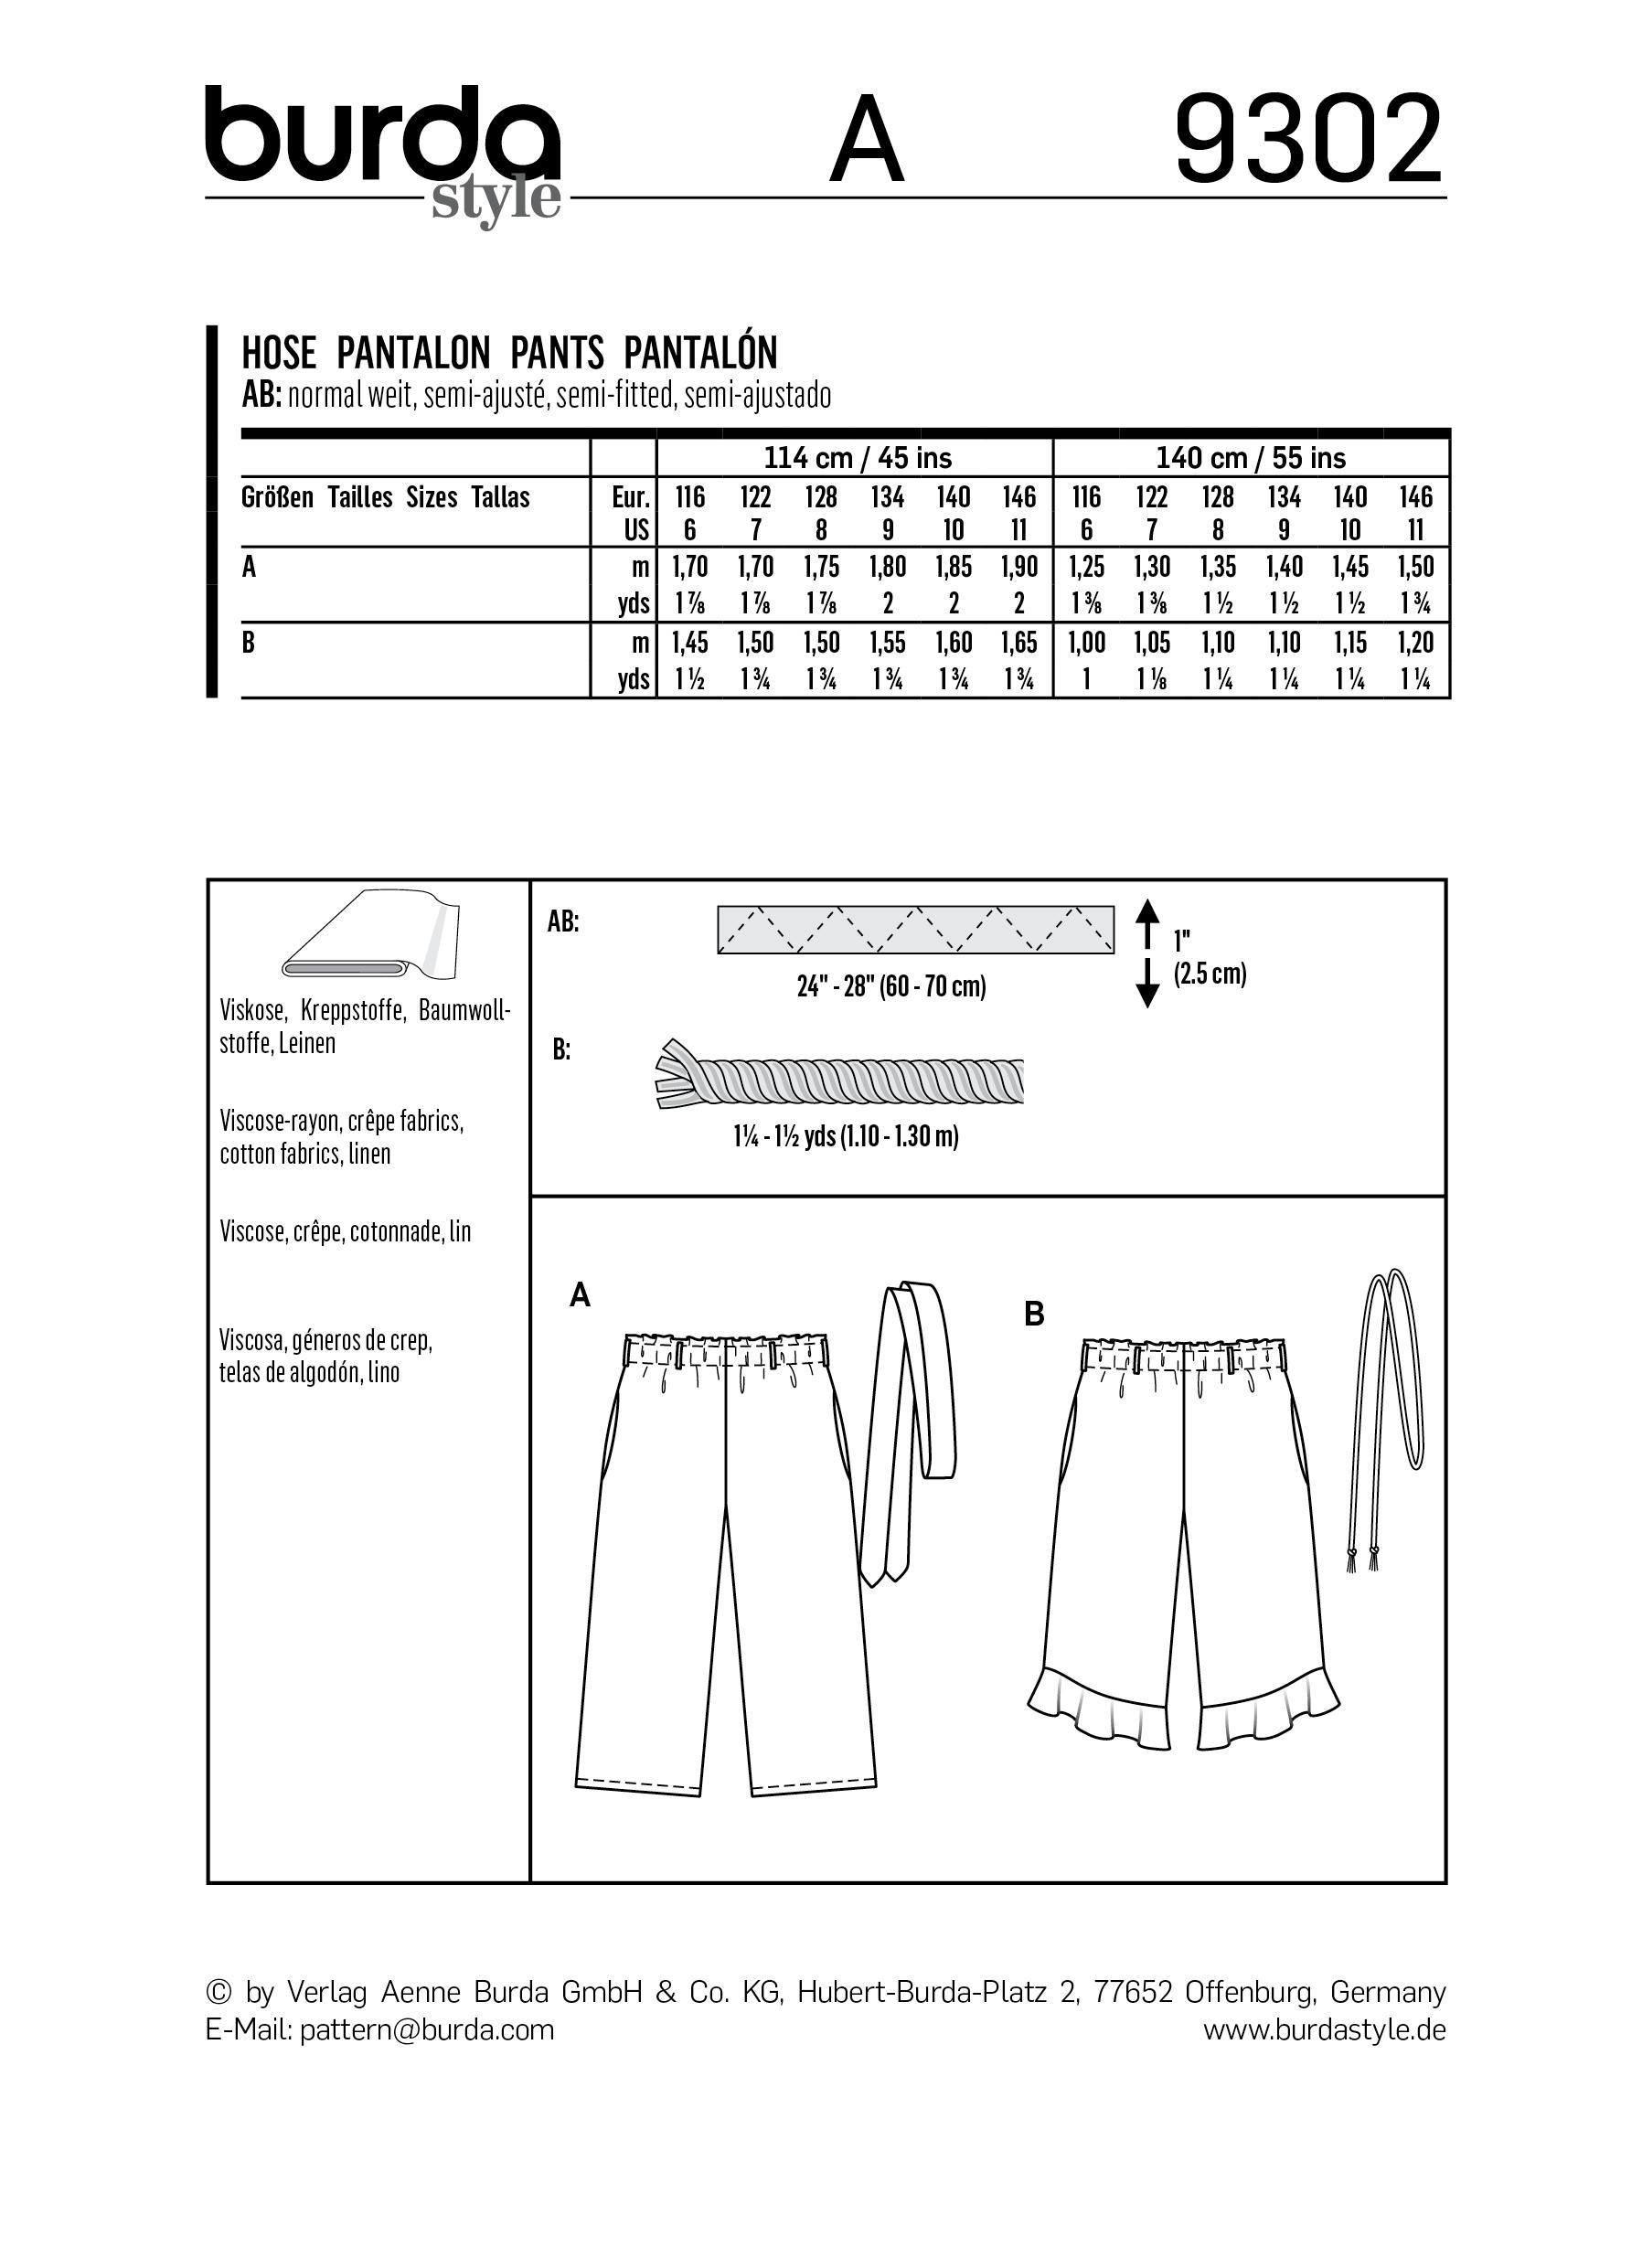 Burda B9302 Pants with Elastic Waist Sewing Pattern